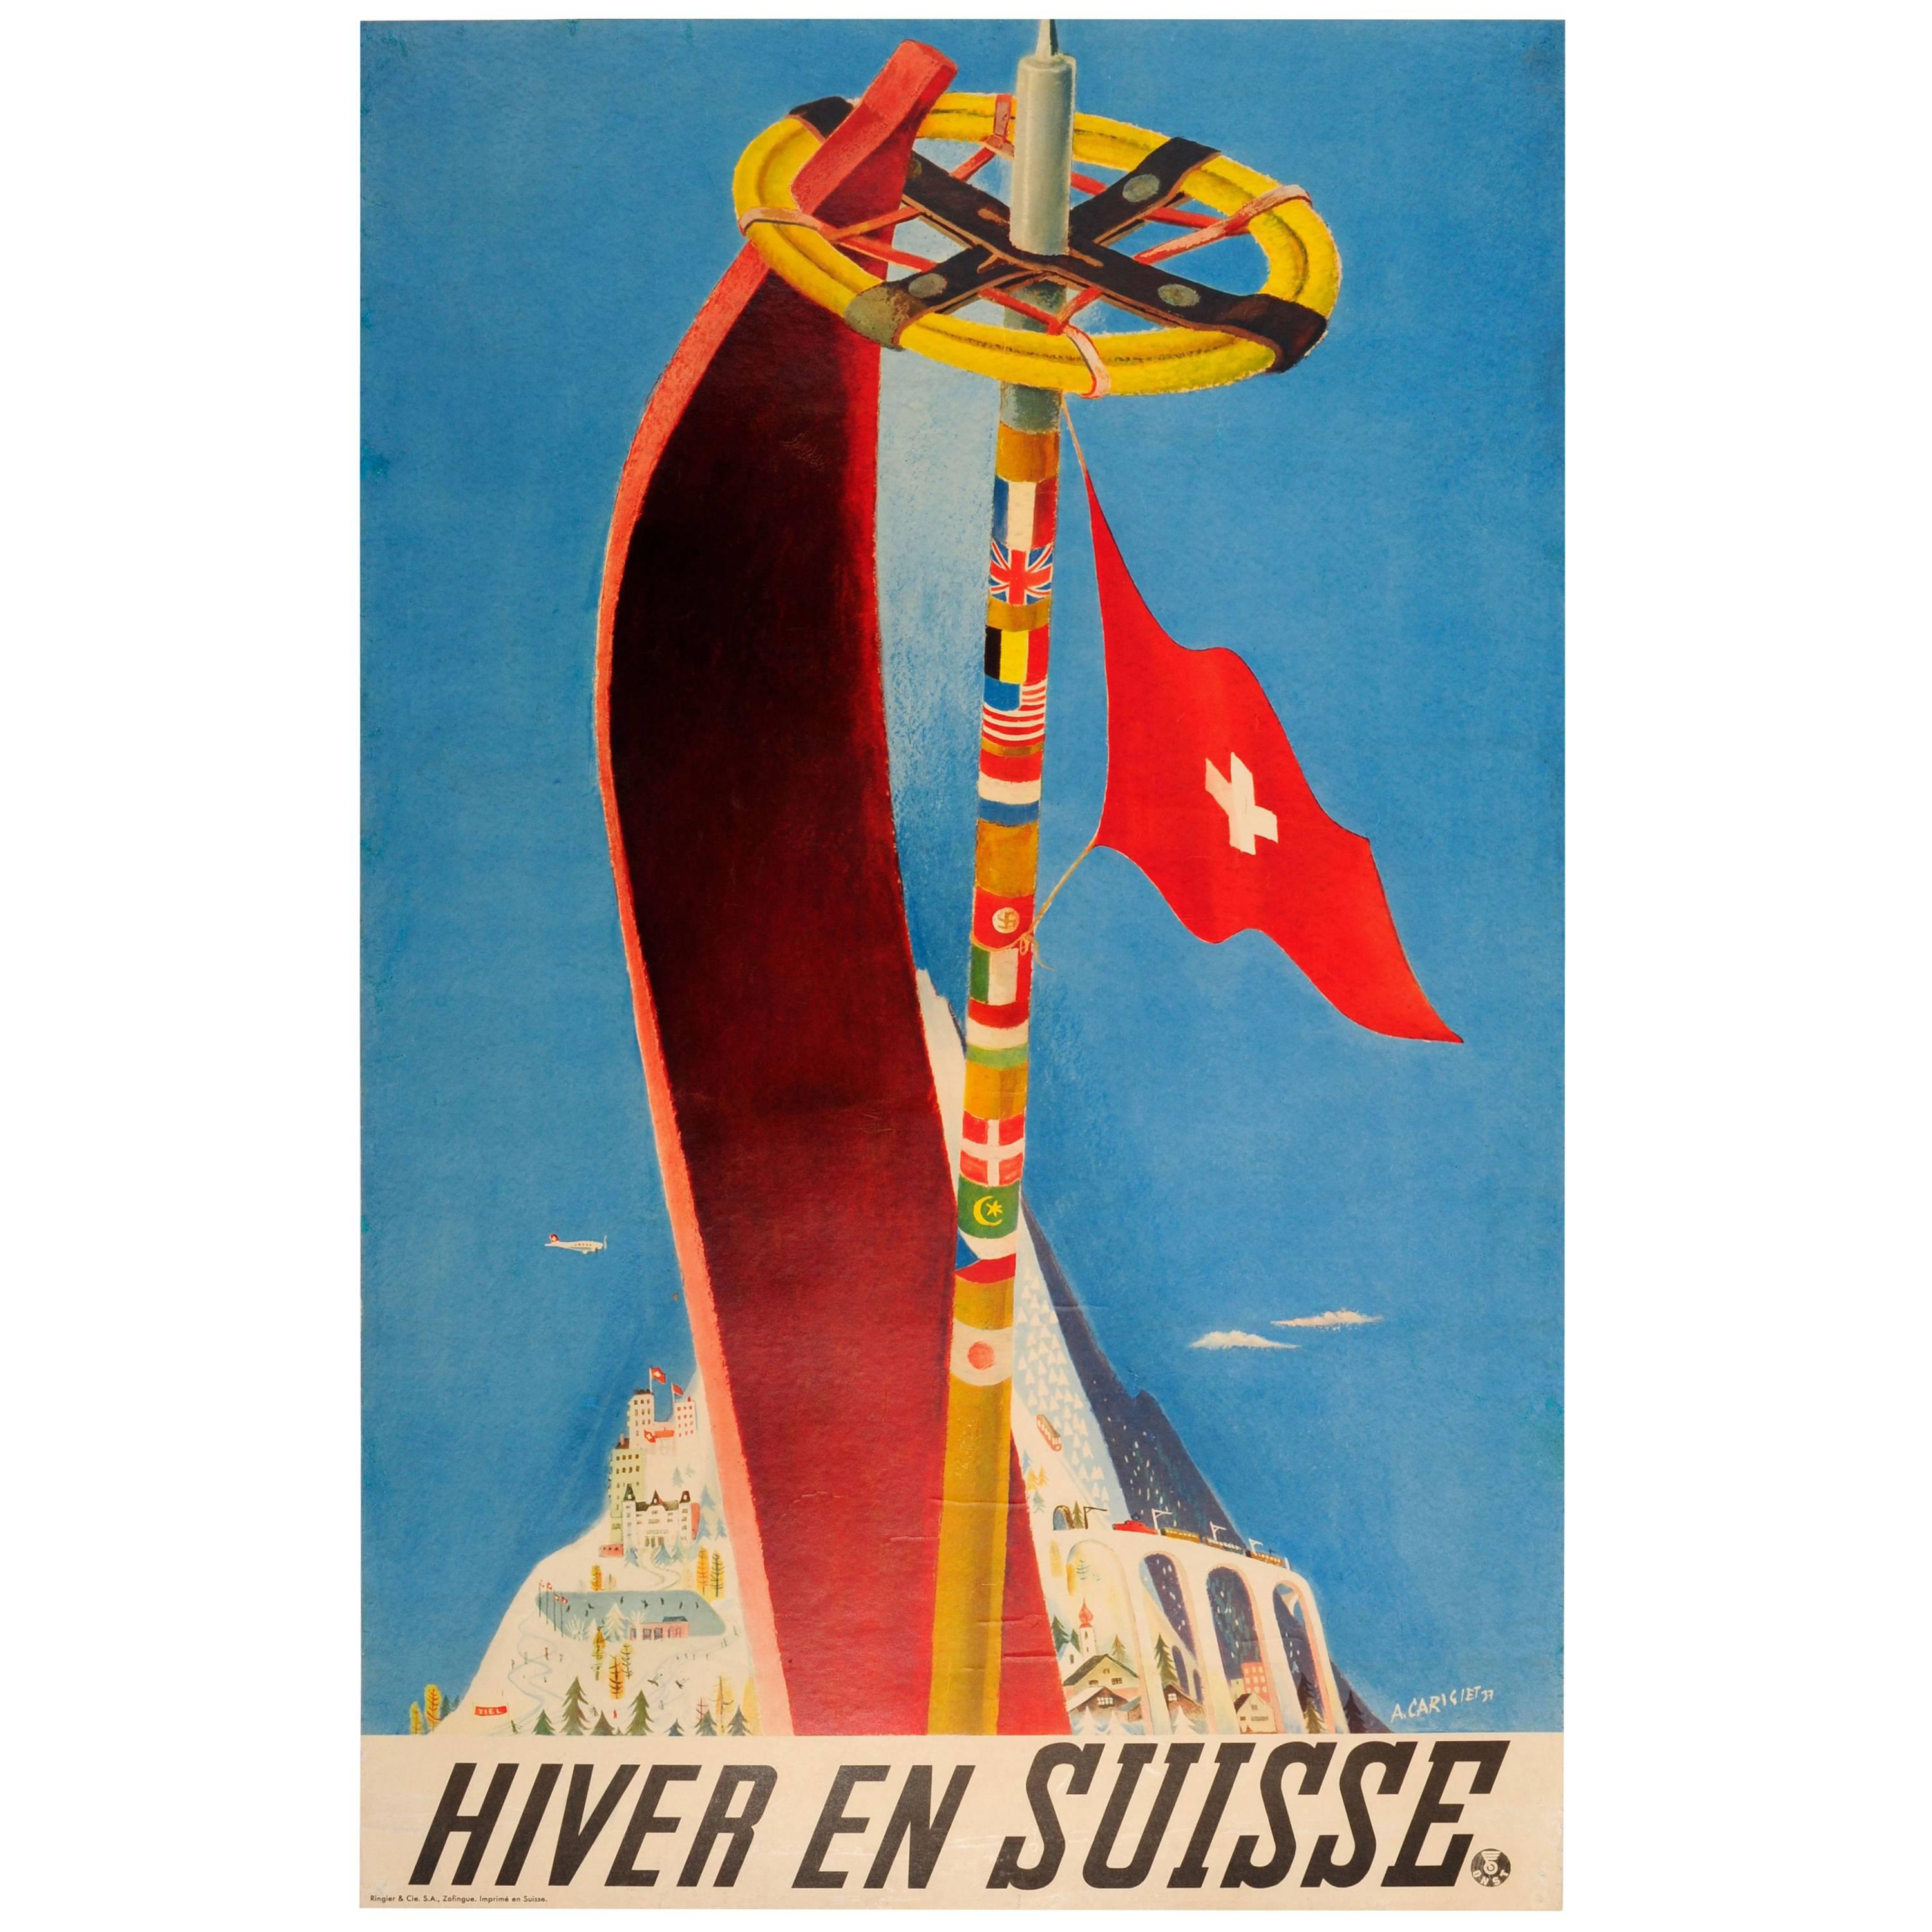 Original Vintage Swiss Railways Winter Sport and Skiing Poster "Hiver En Suisse"